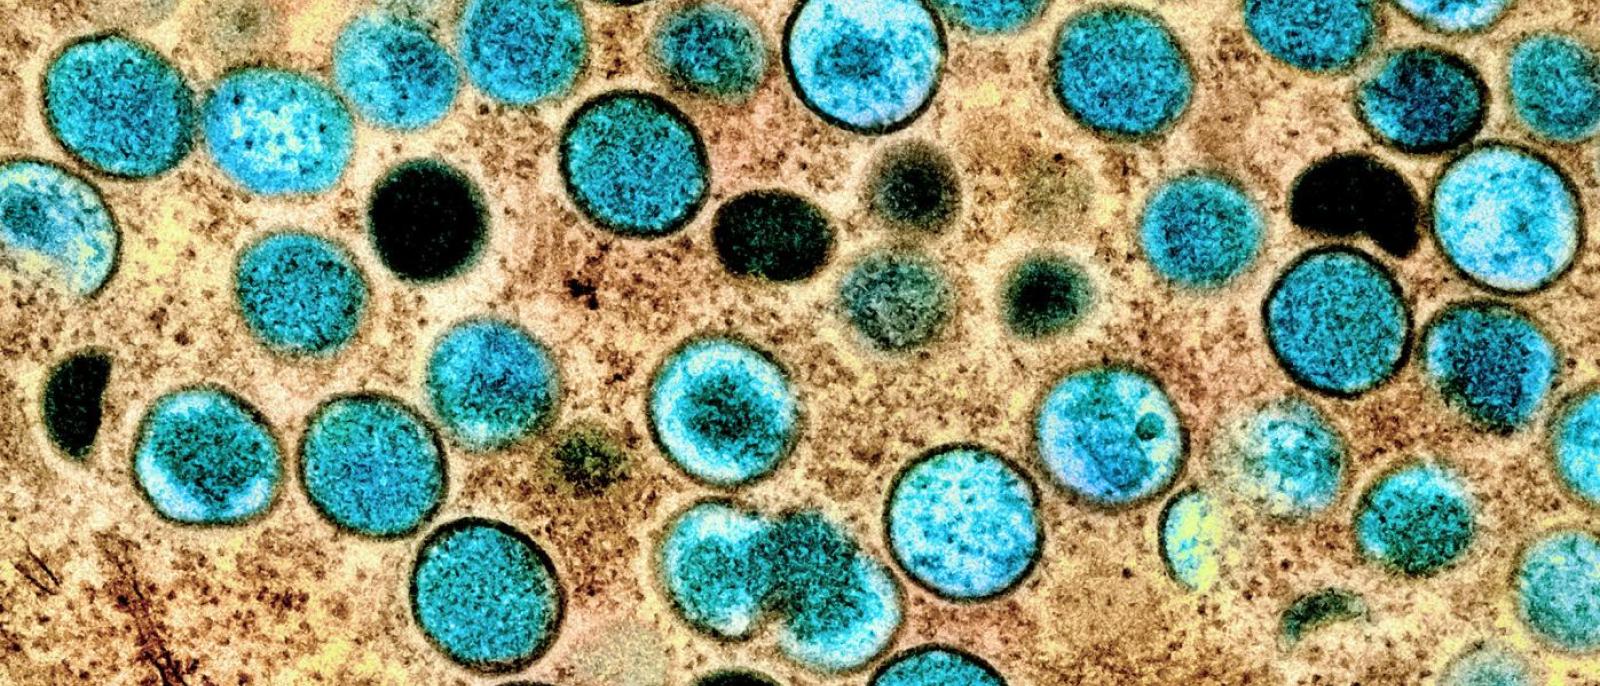 Mpox Antiviral Outcomes Are Similar Regardless of HIV Status